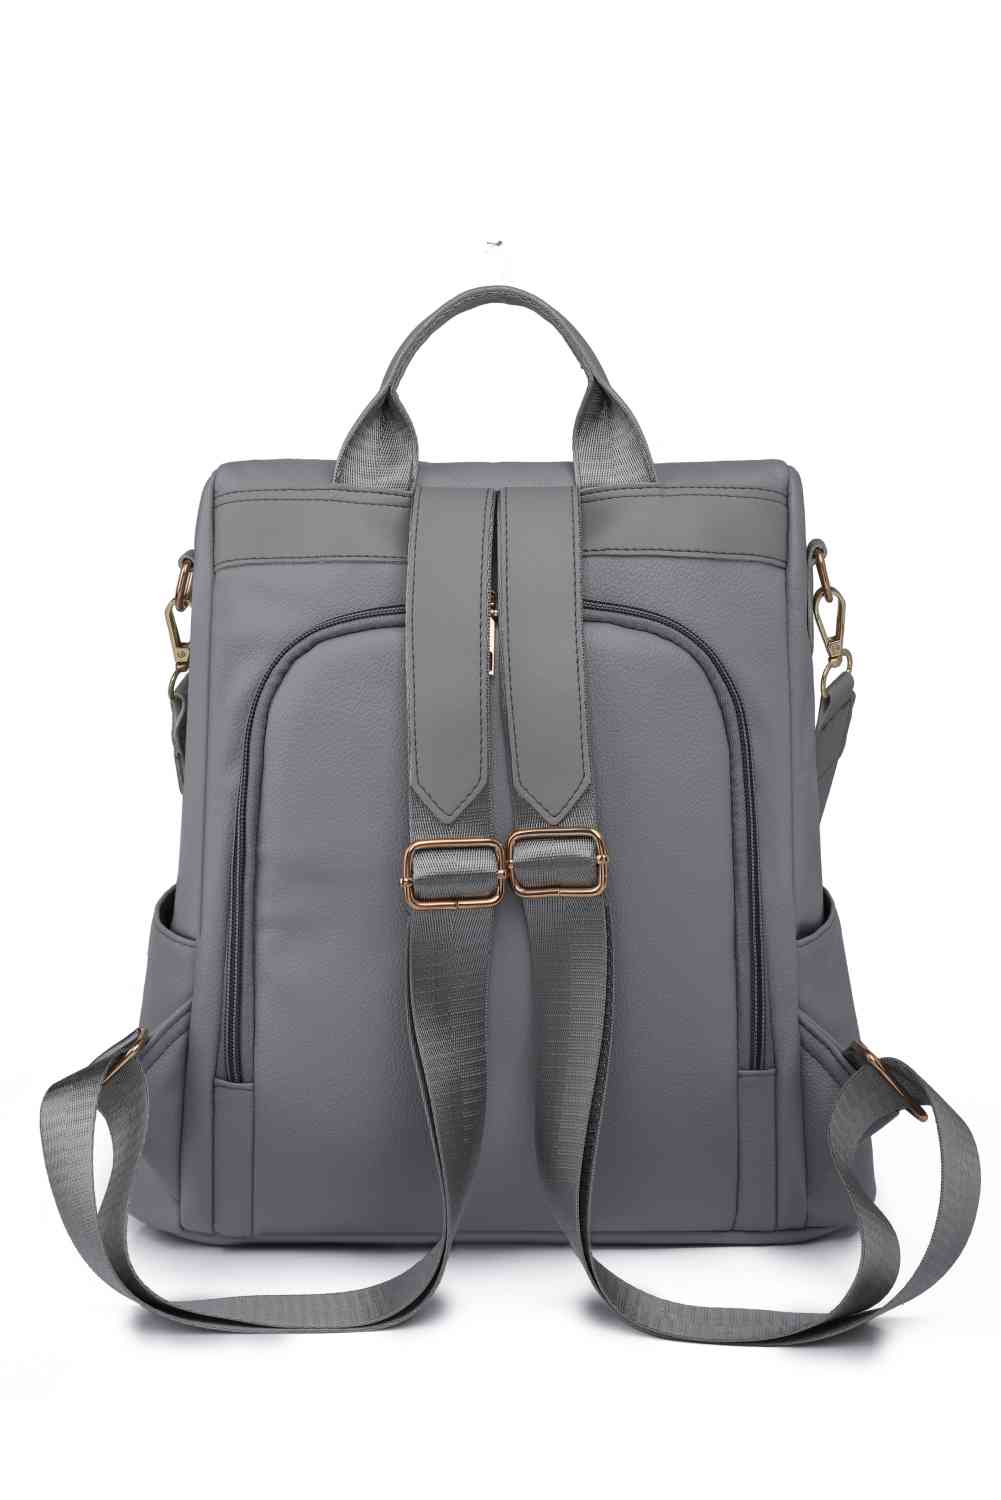 Pum-Pum Zipper Backpack free shipping -Oh Em Gee Boutique